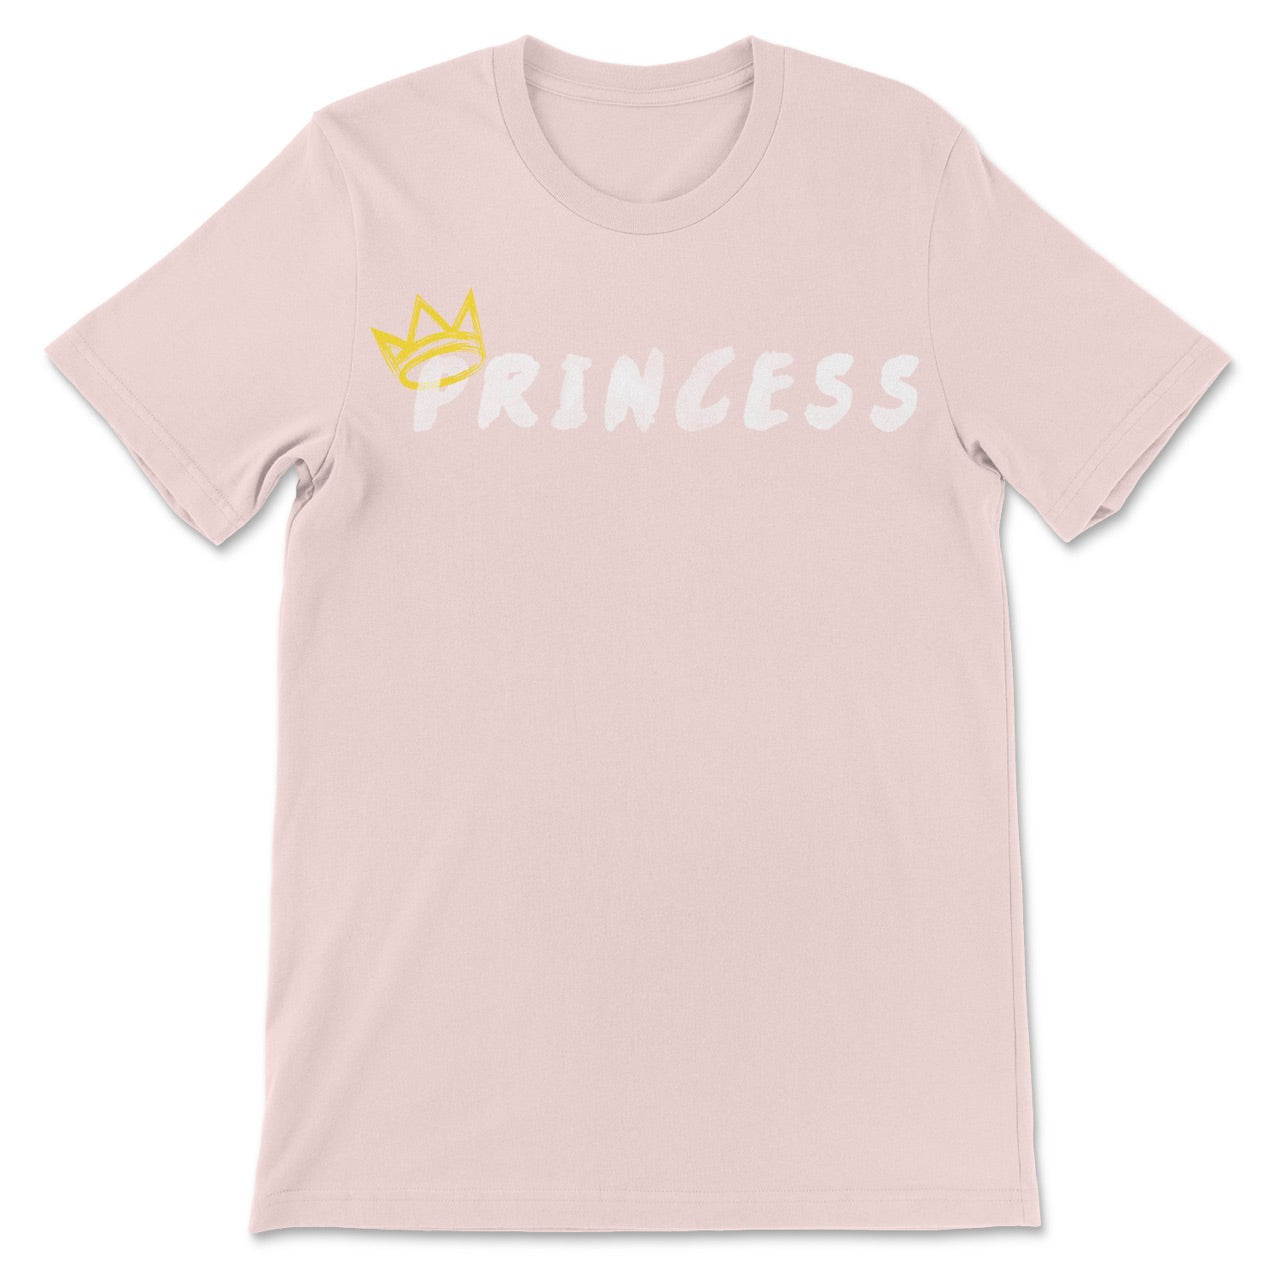 Princess Short Sleeve T-Shirt (Gold Crown)